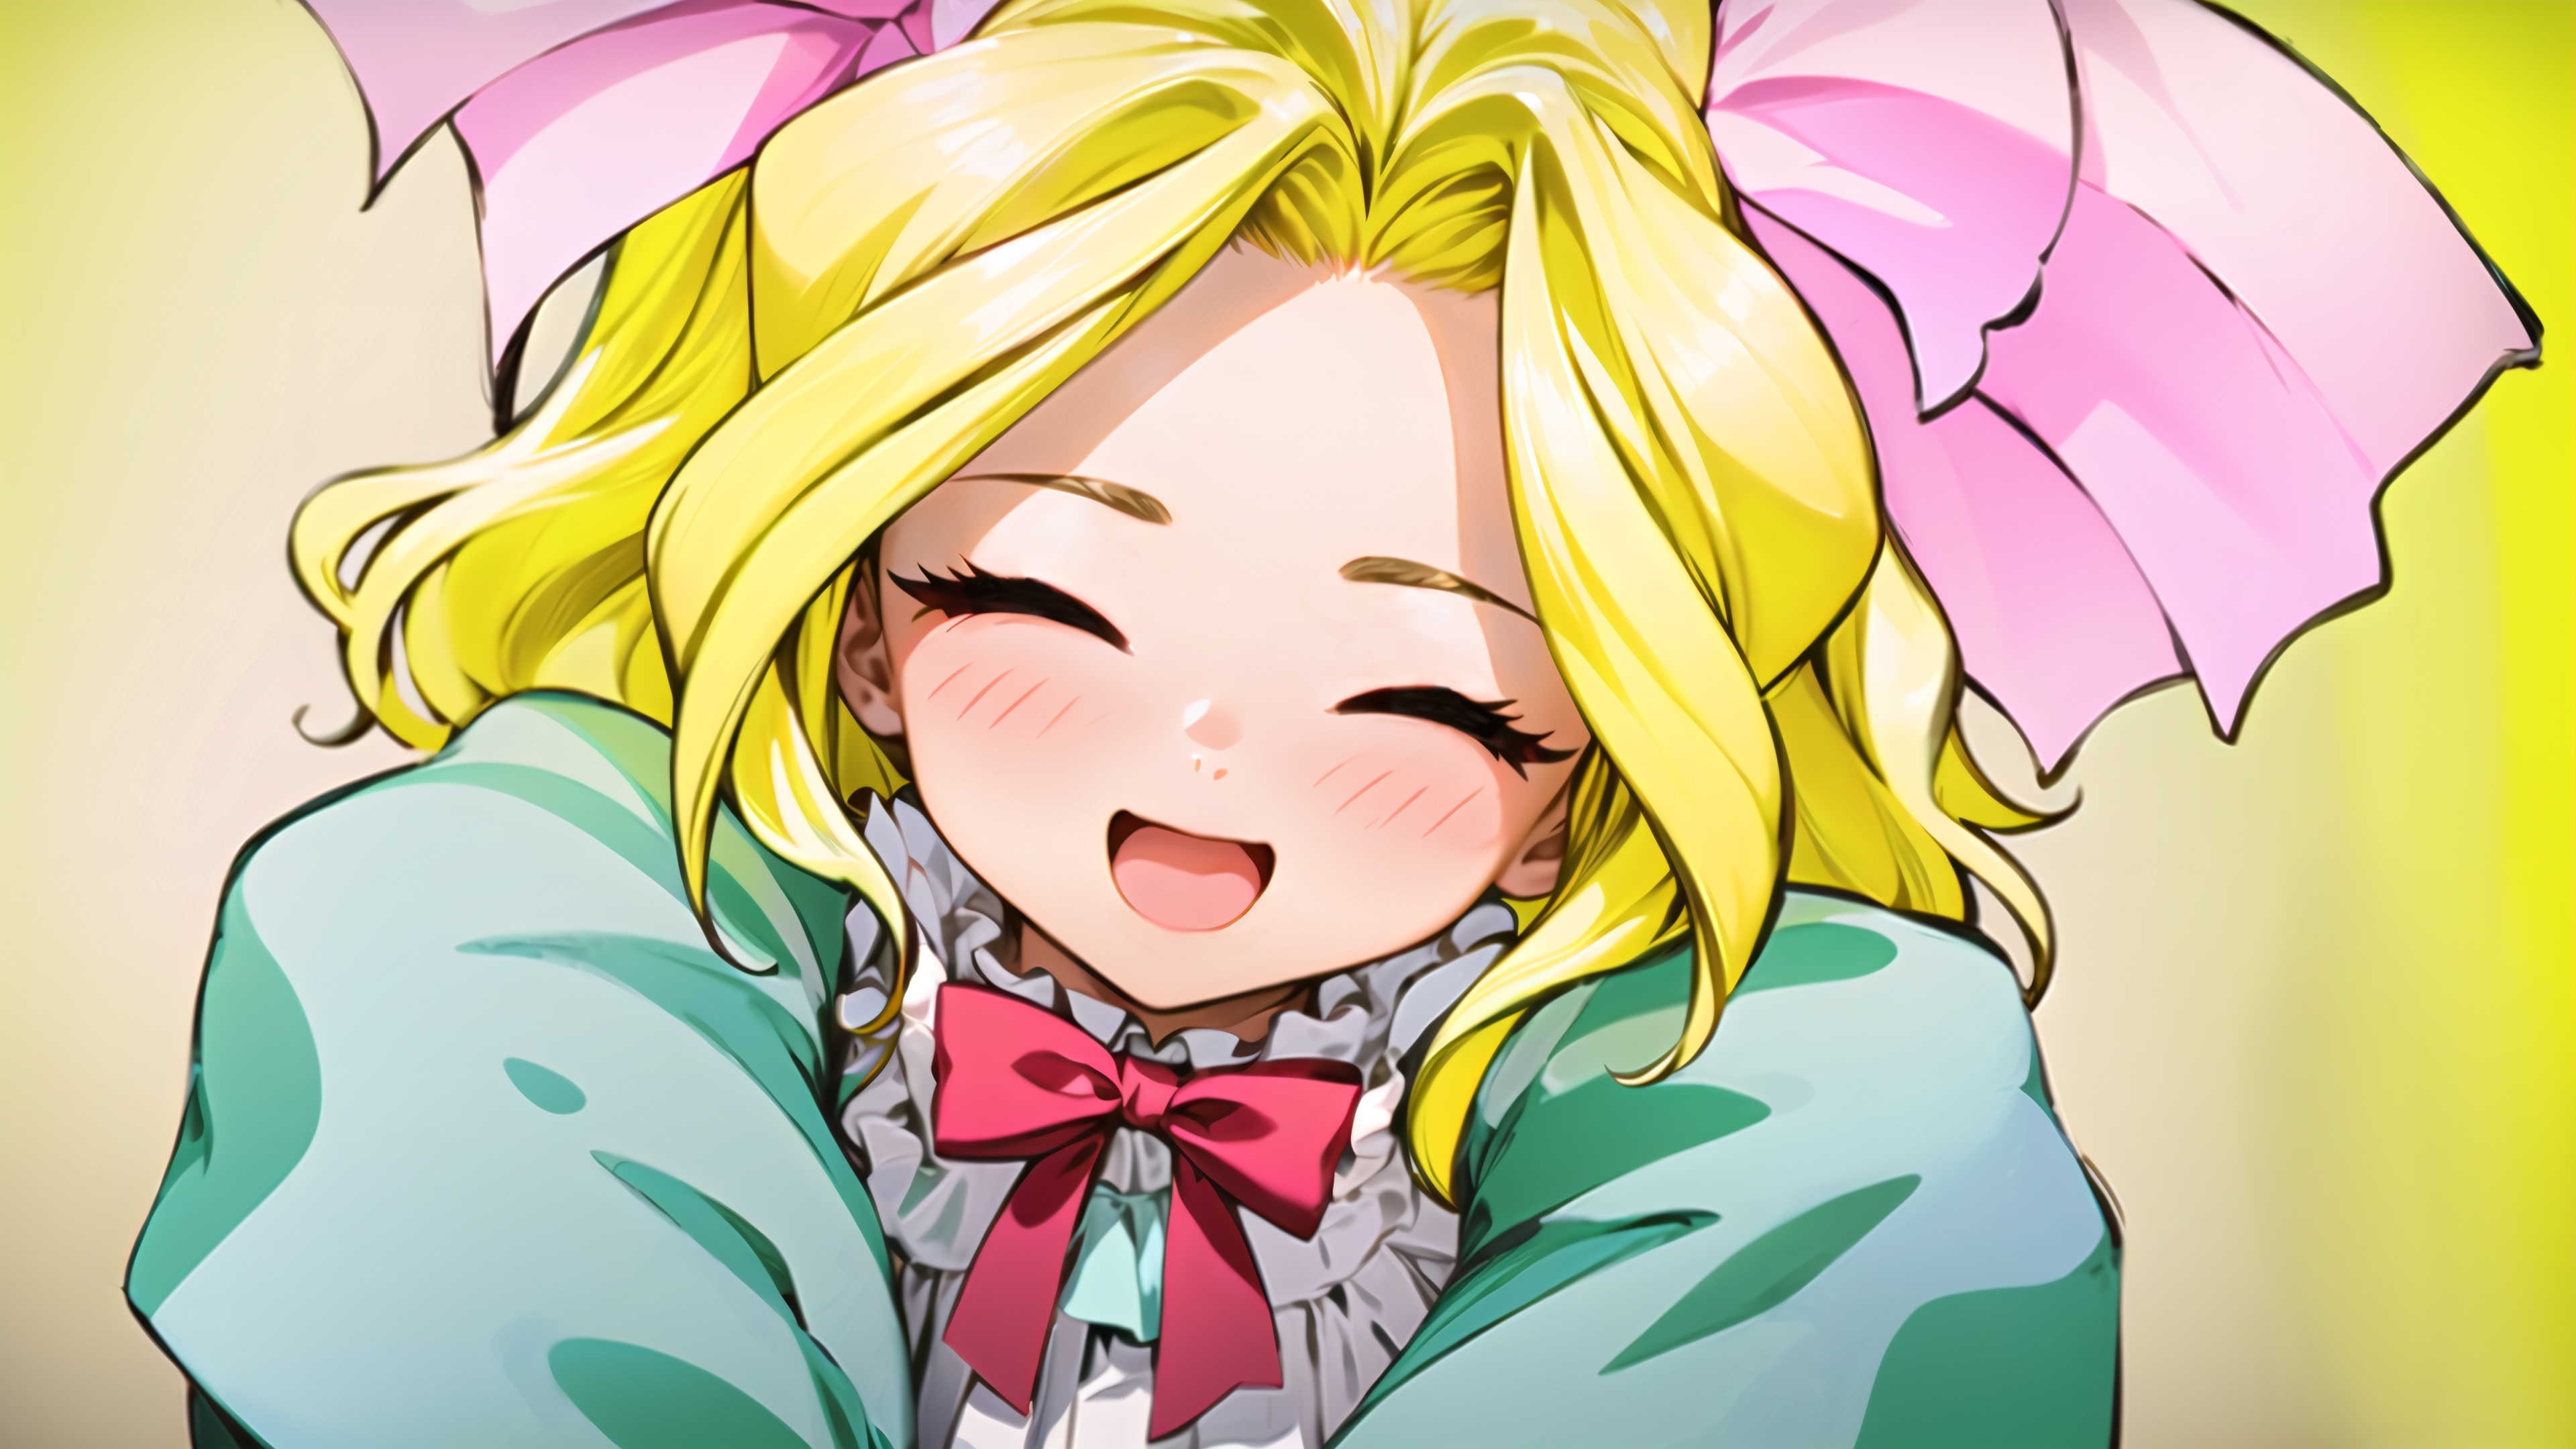 Anime 3840x2160 AI art Sakura Wars Iris Chateaubriand pink ribbon bow tie smiling anime games blonde green dress anime girls